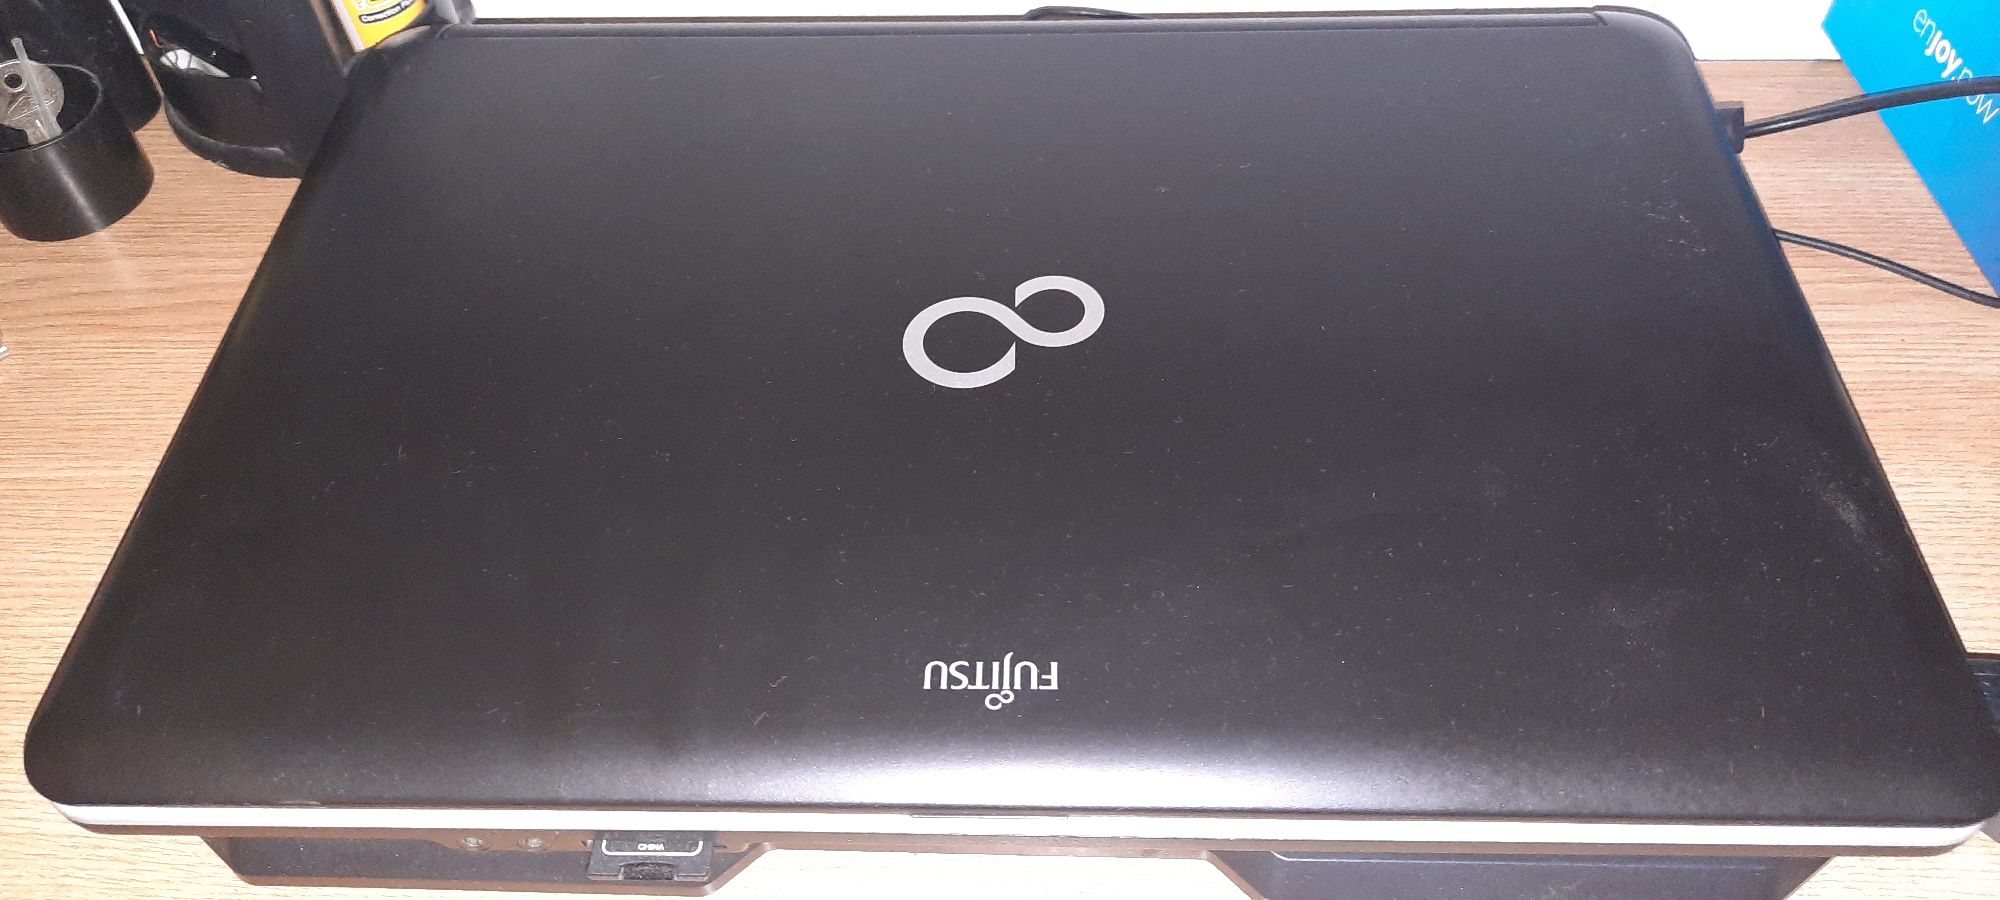 Laptop Fujitsu A530